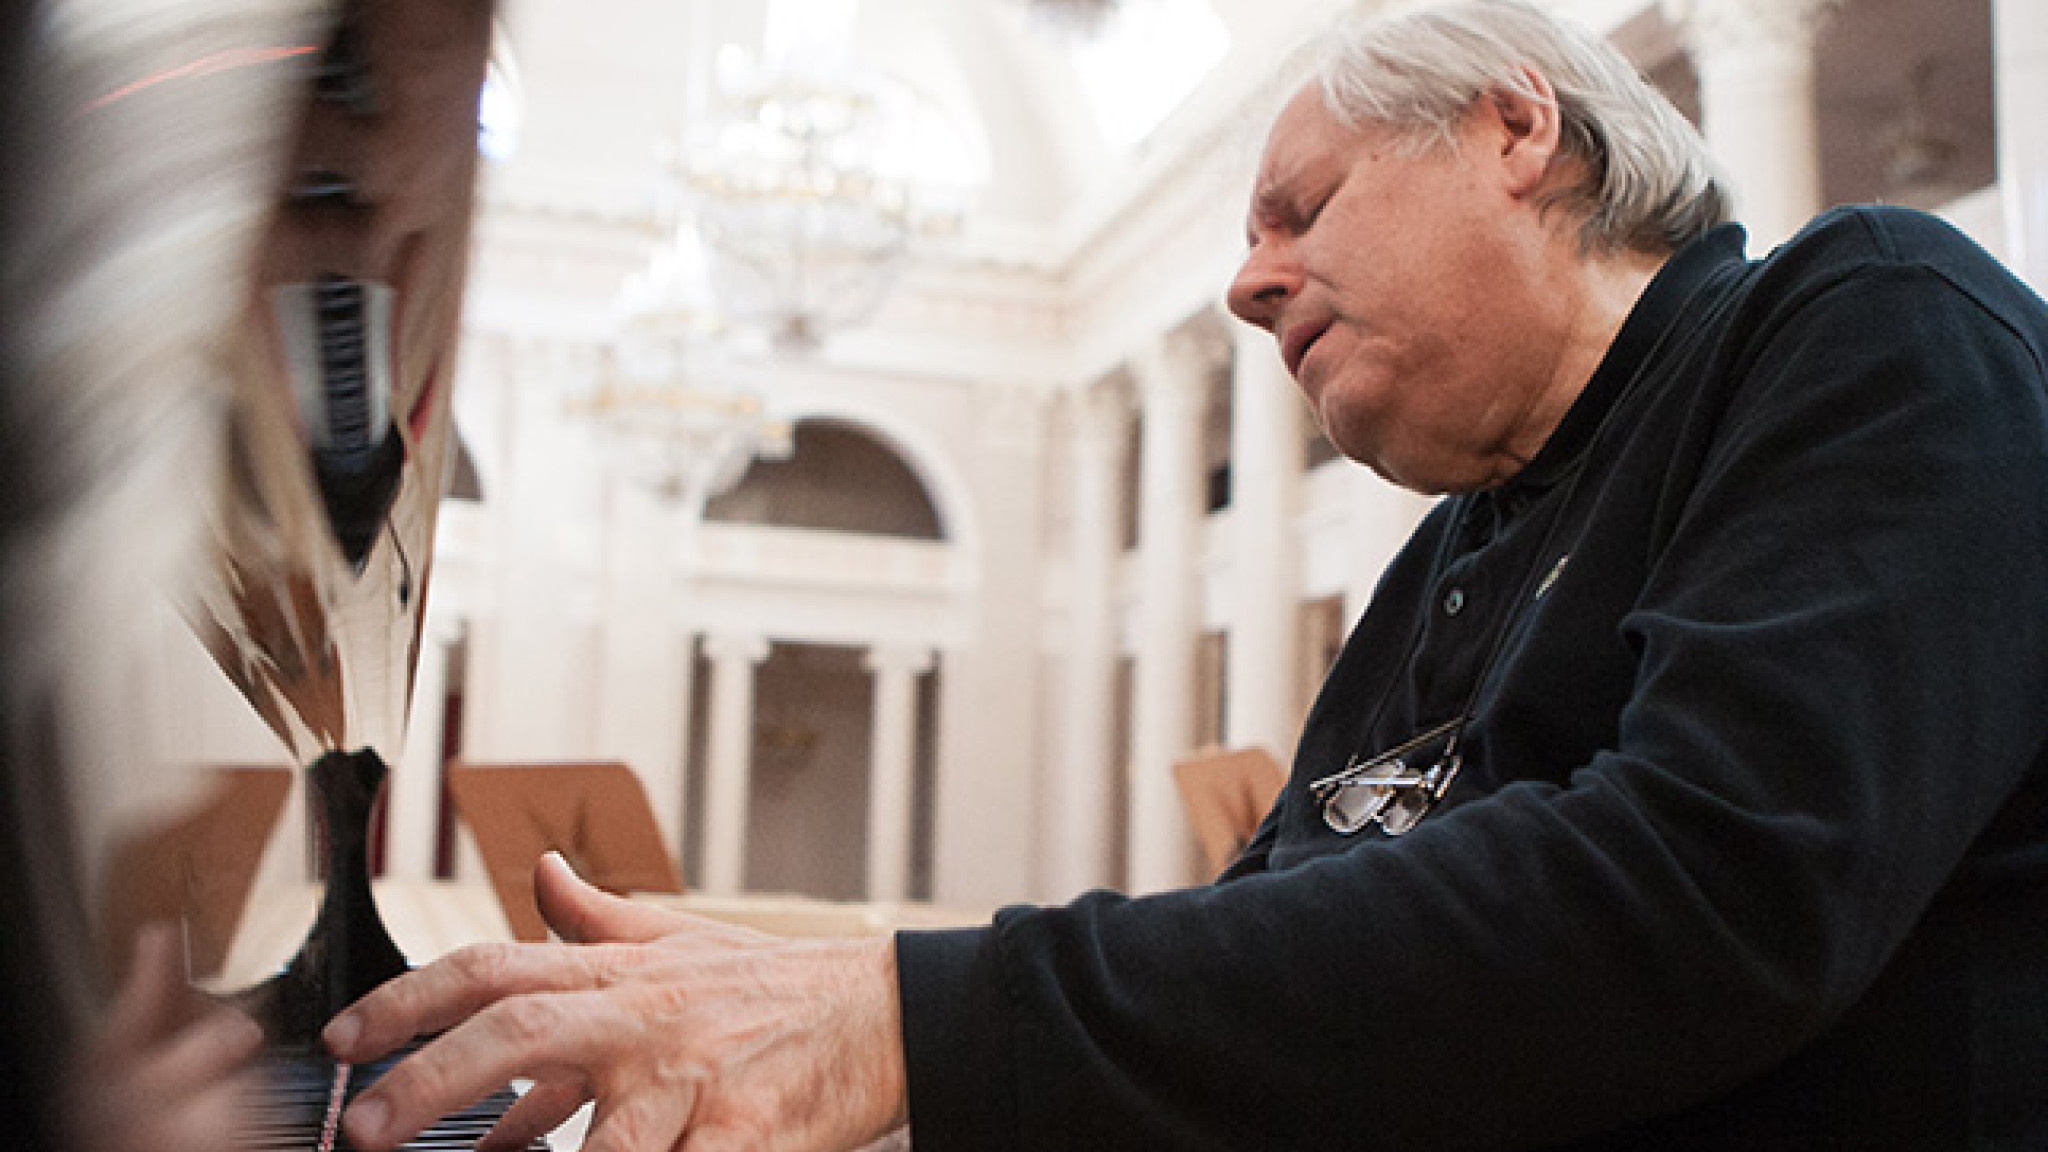 Der größte lebende Pianist - Fono Forum portraitiert Grigory Sokolov